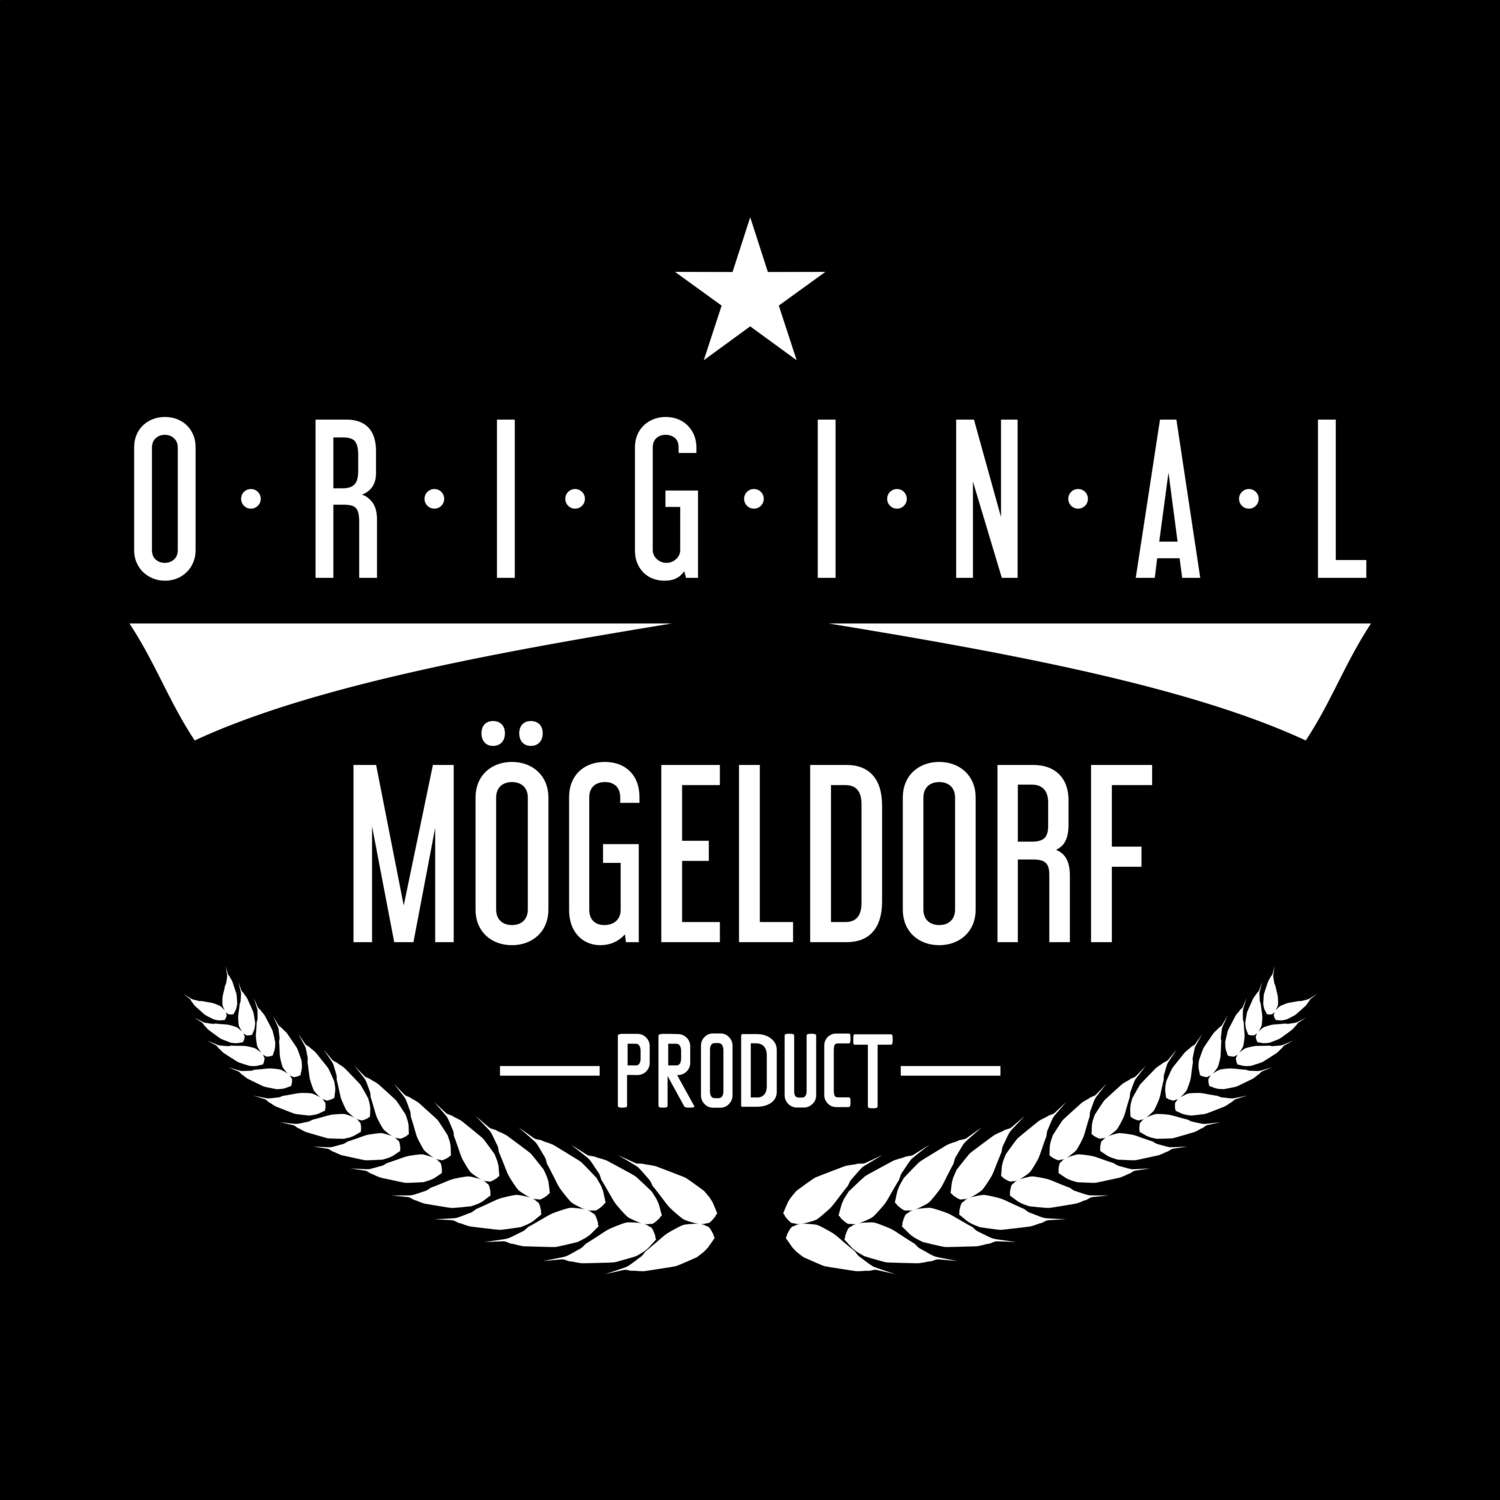 Mögeldorf T-Shirt »Original Product«